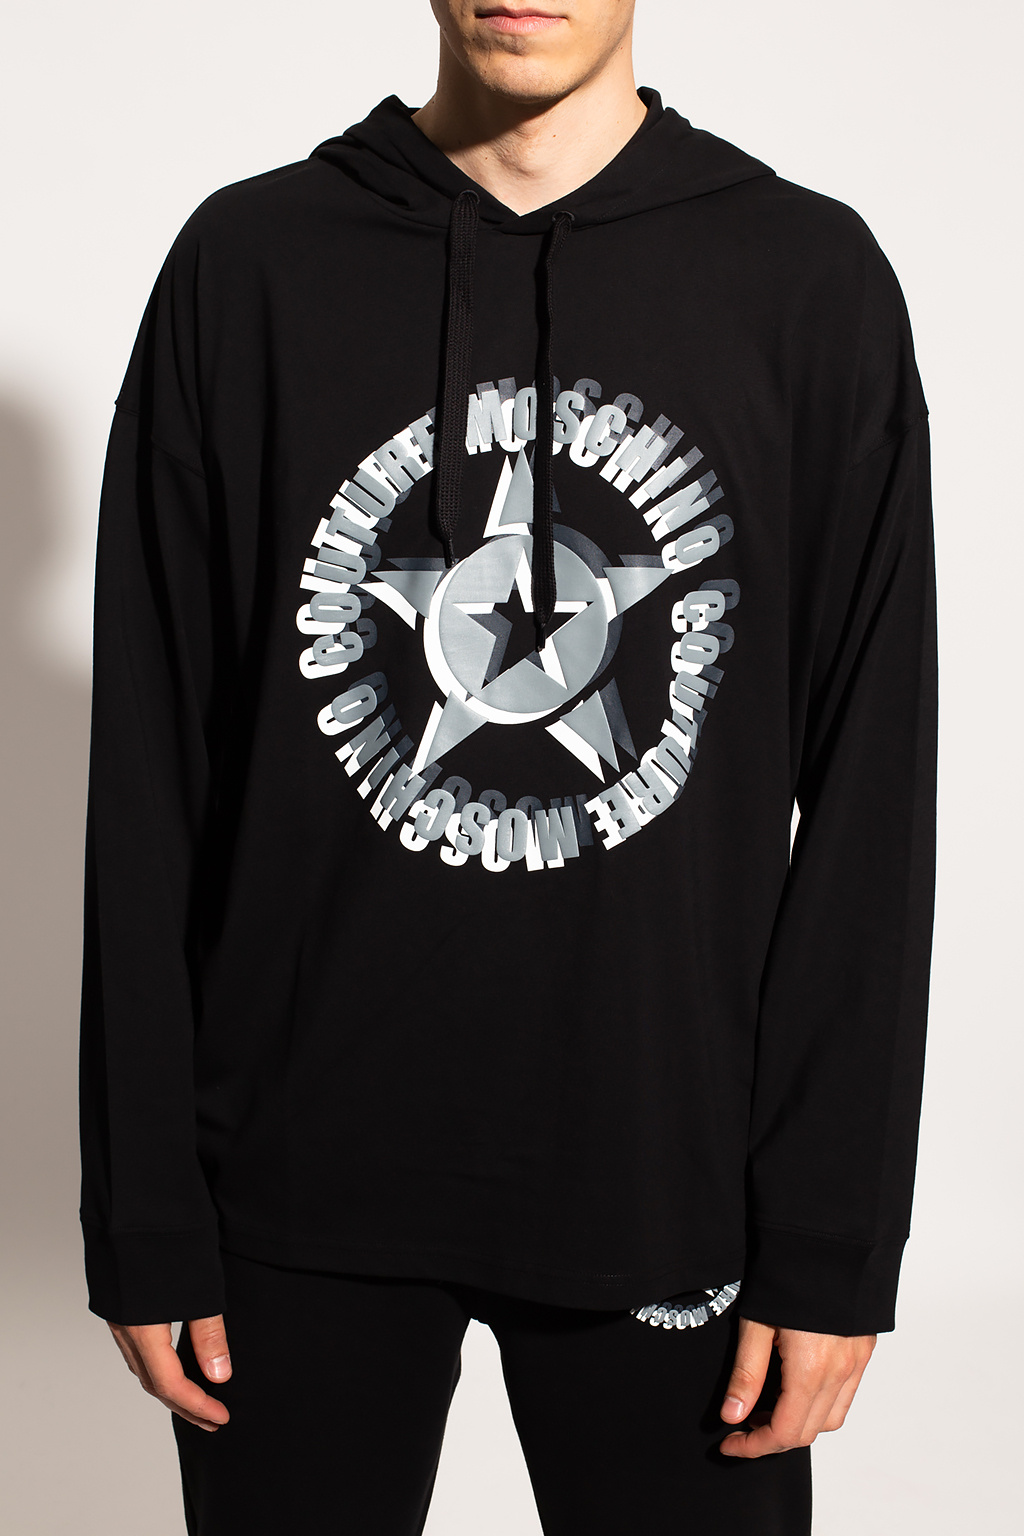 Moschino Logo-printed hoodie